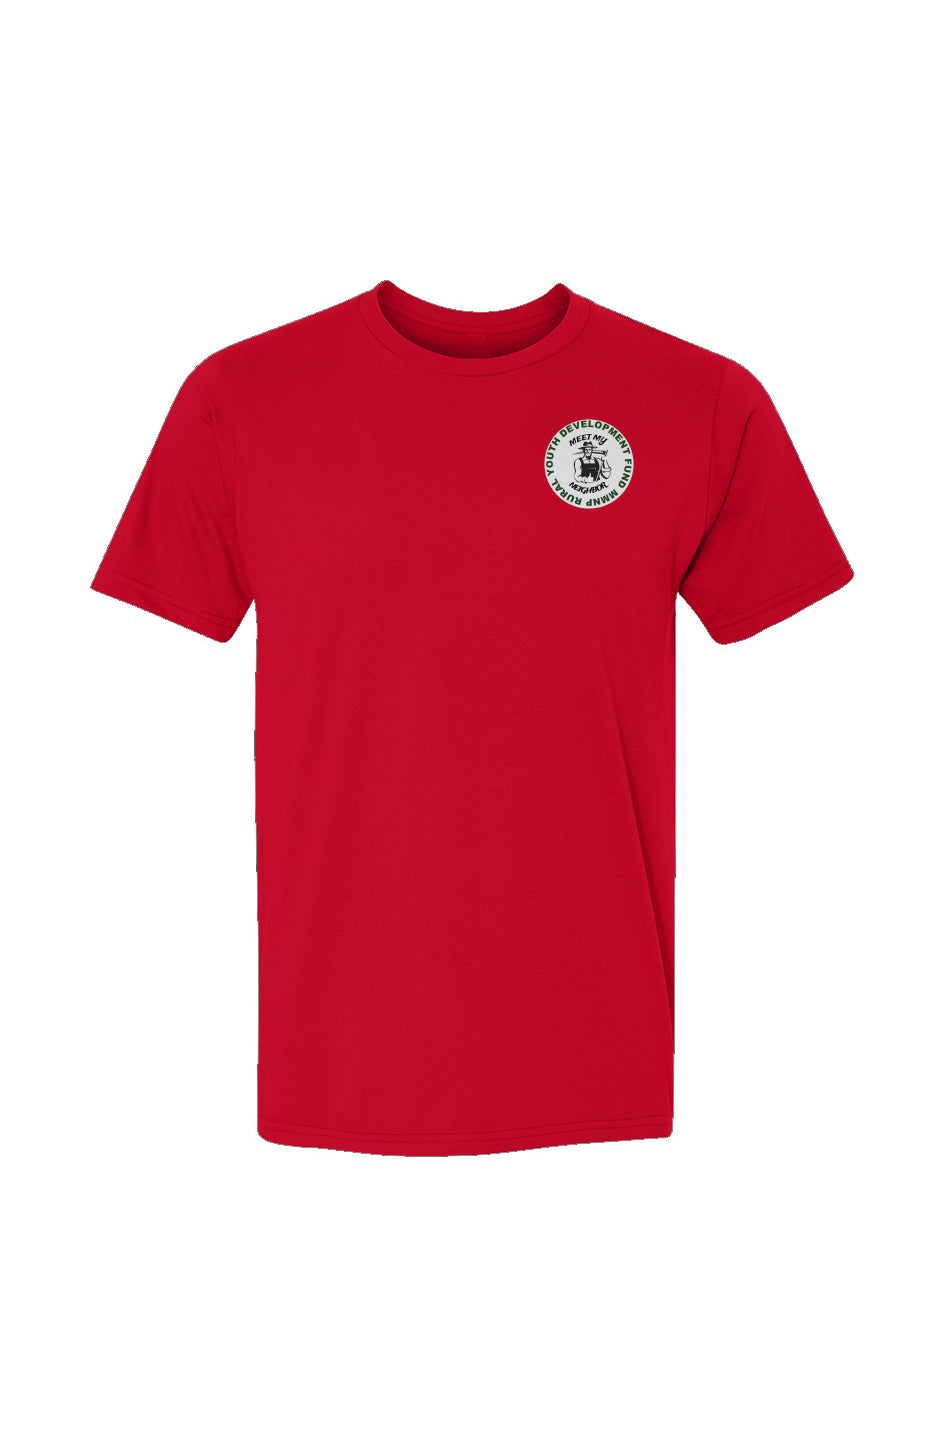 Rural Youth Development Fund USA-Made Ringspun Unisex T-Shirt